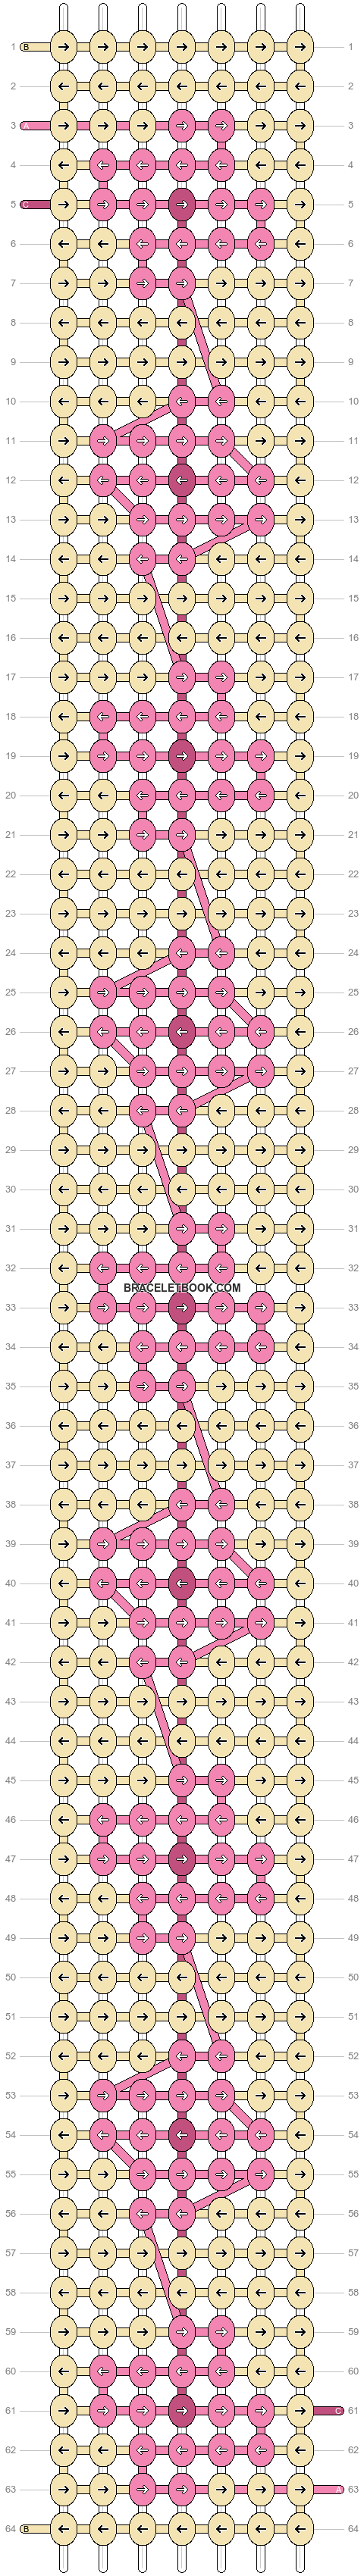 Alpha pattern #31379 variation #41315 pattern